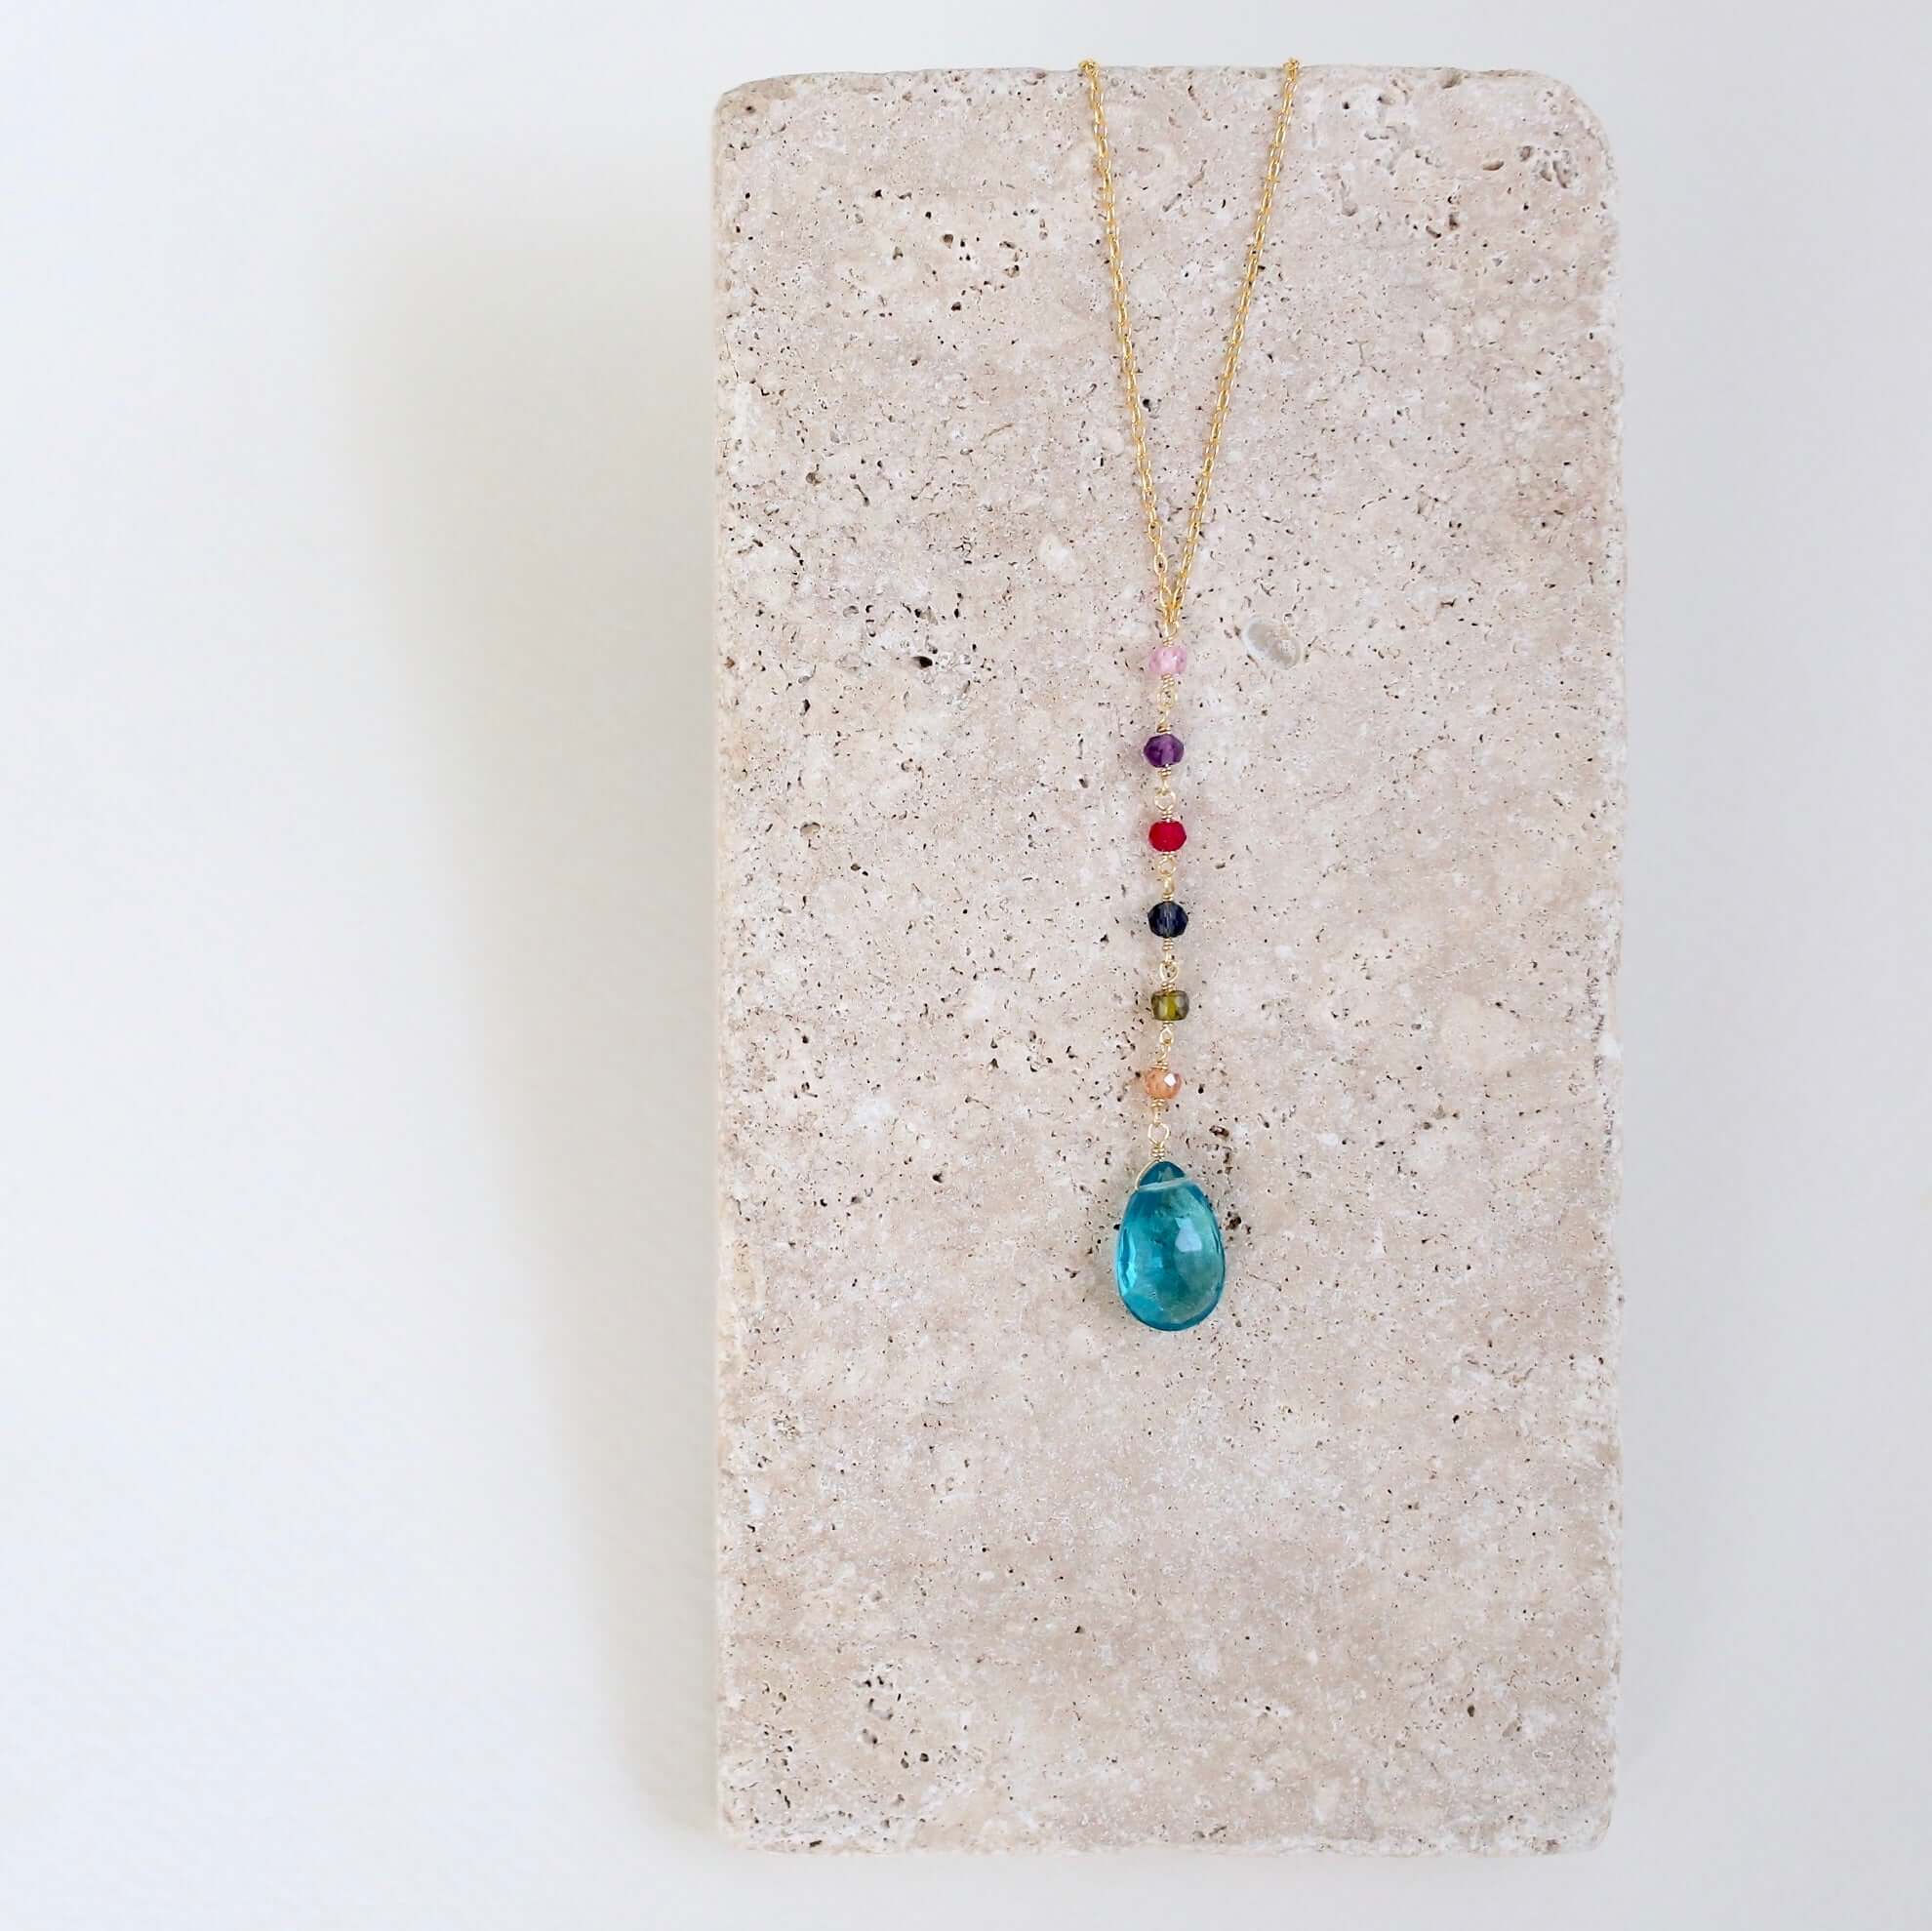 Gold Yoga pendant with neon blue quartz gemstones, multi-color accent stones Necklace